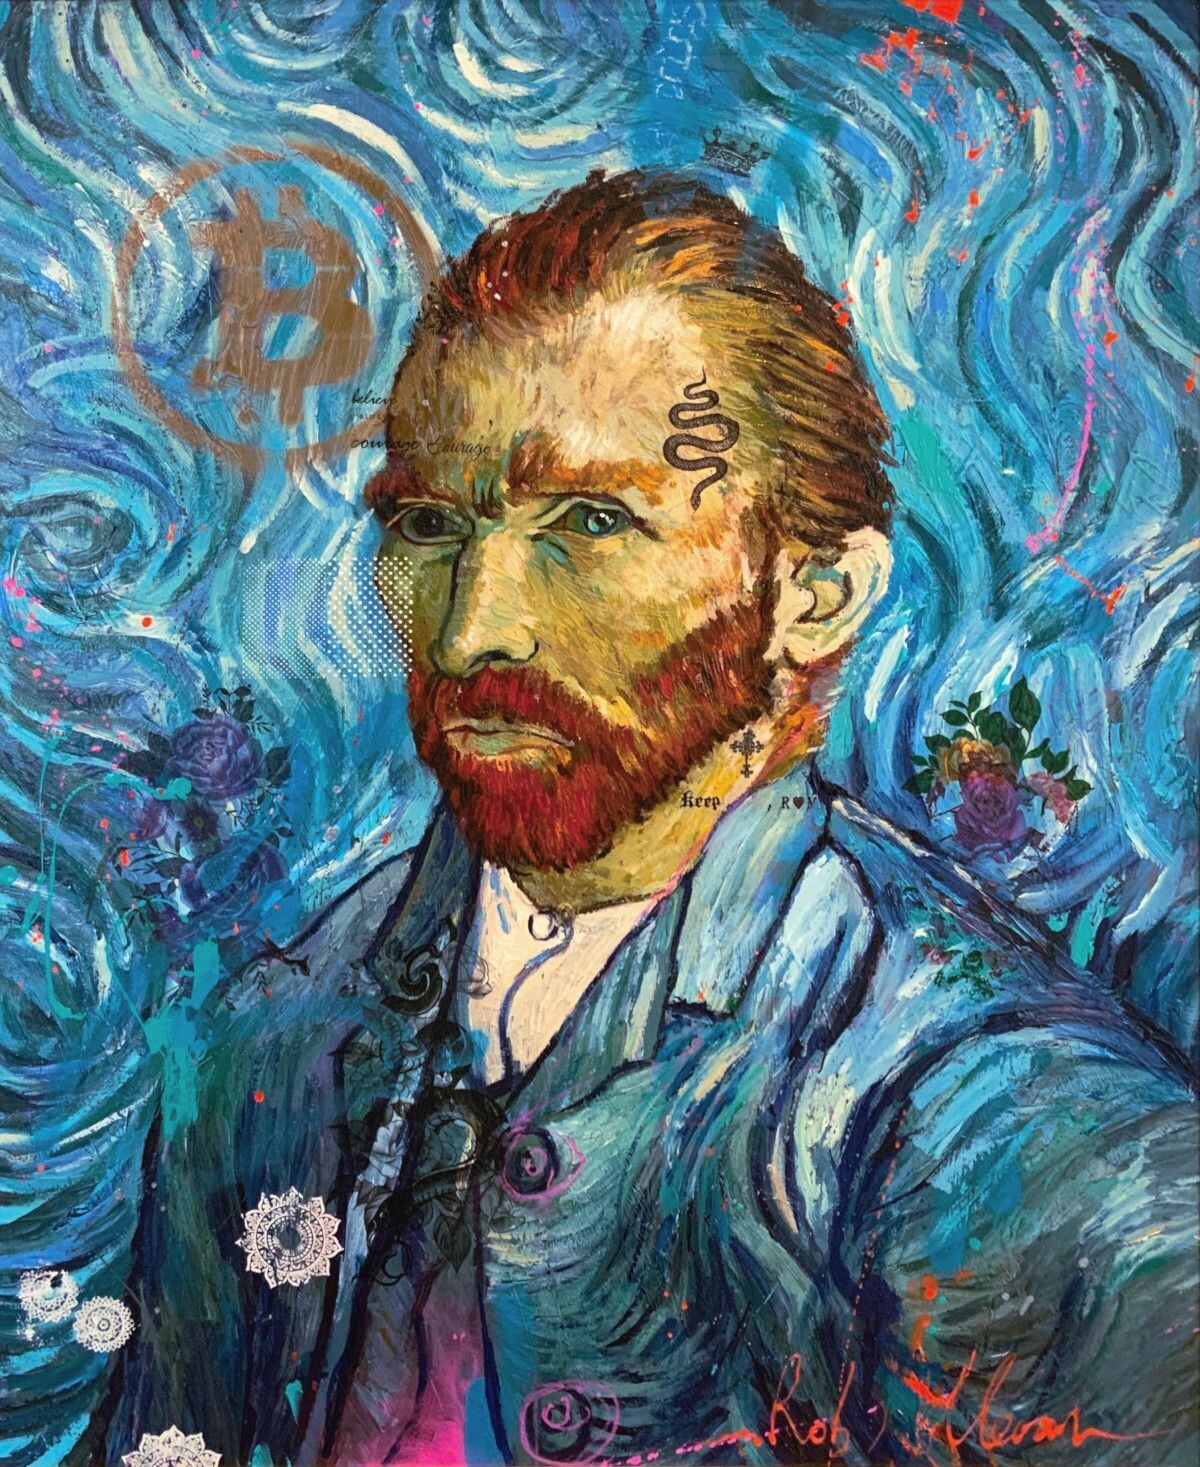 Van Gogh Revisited